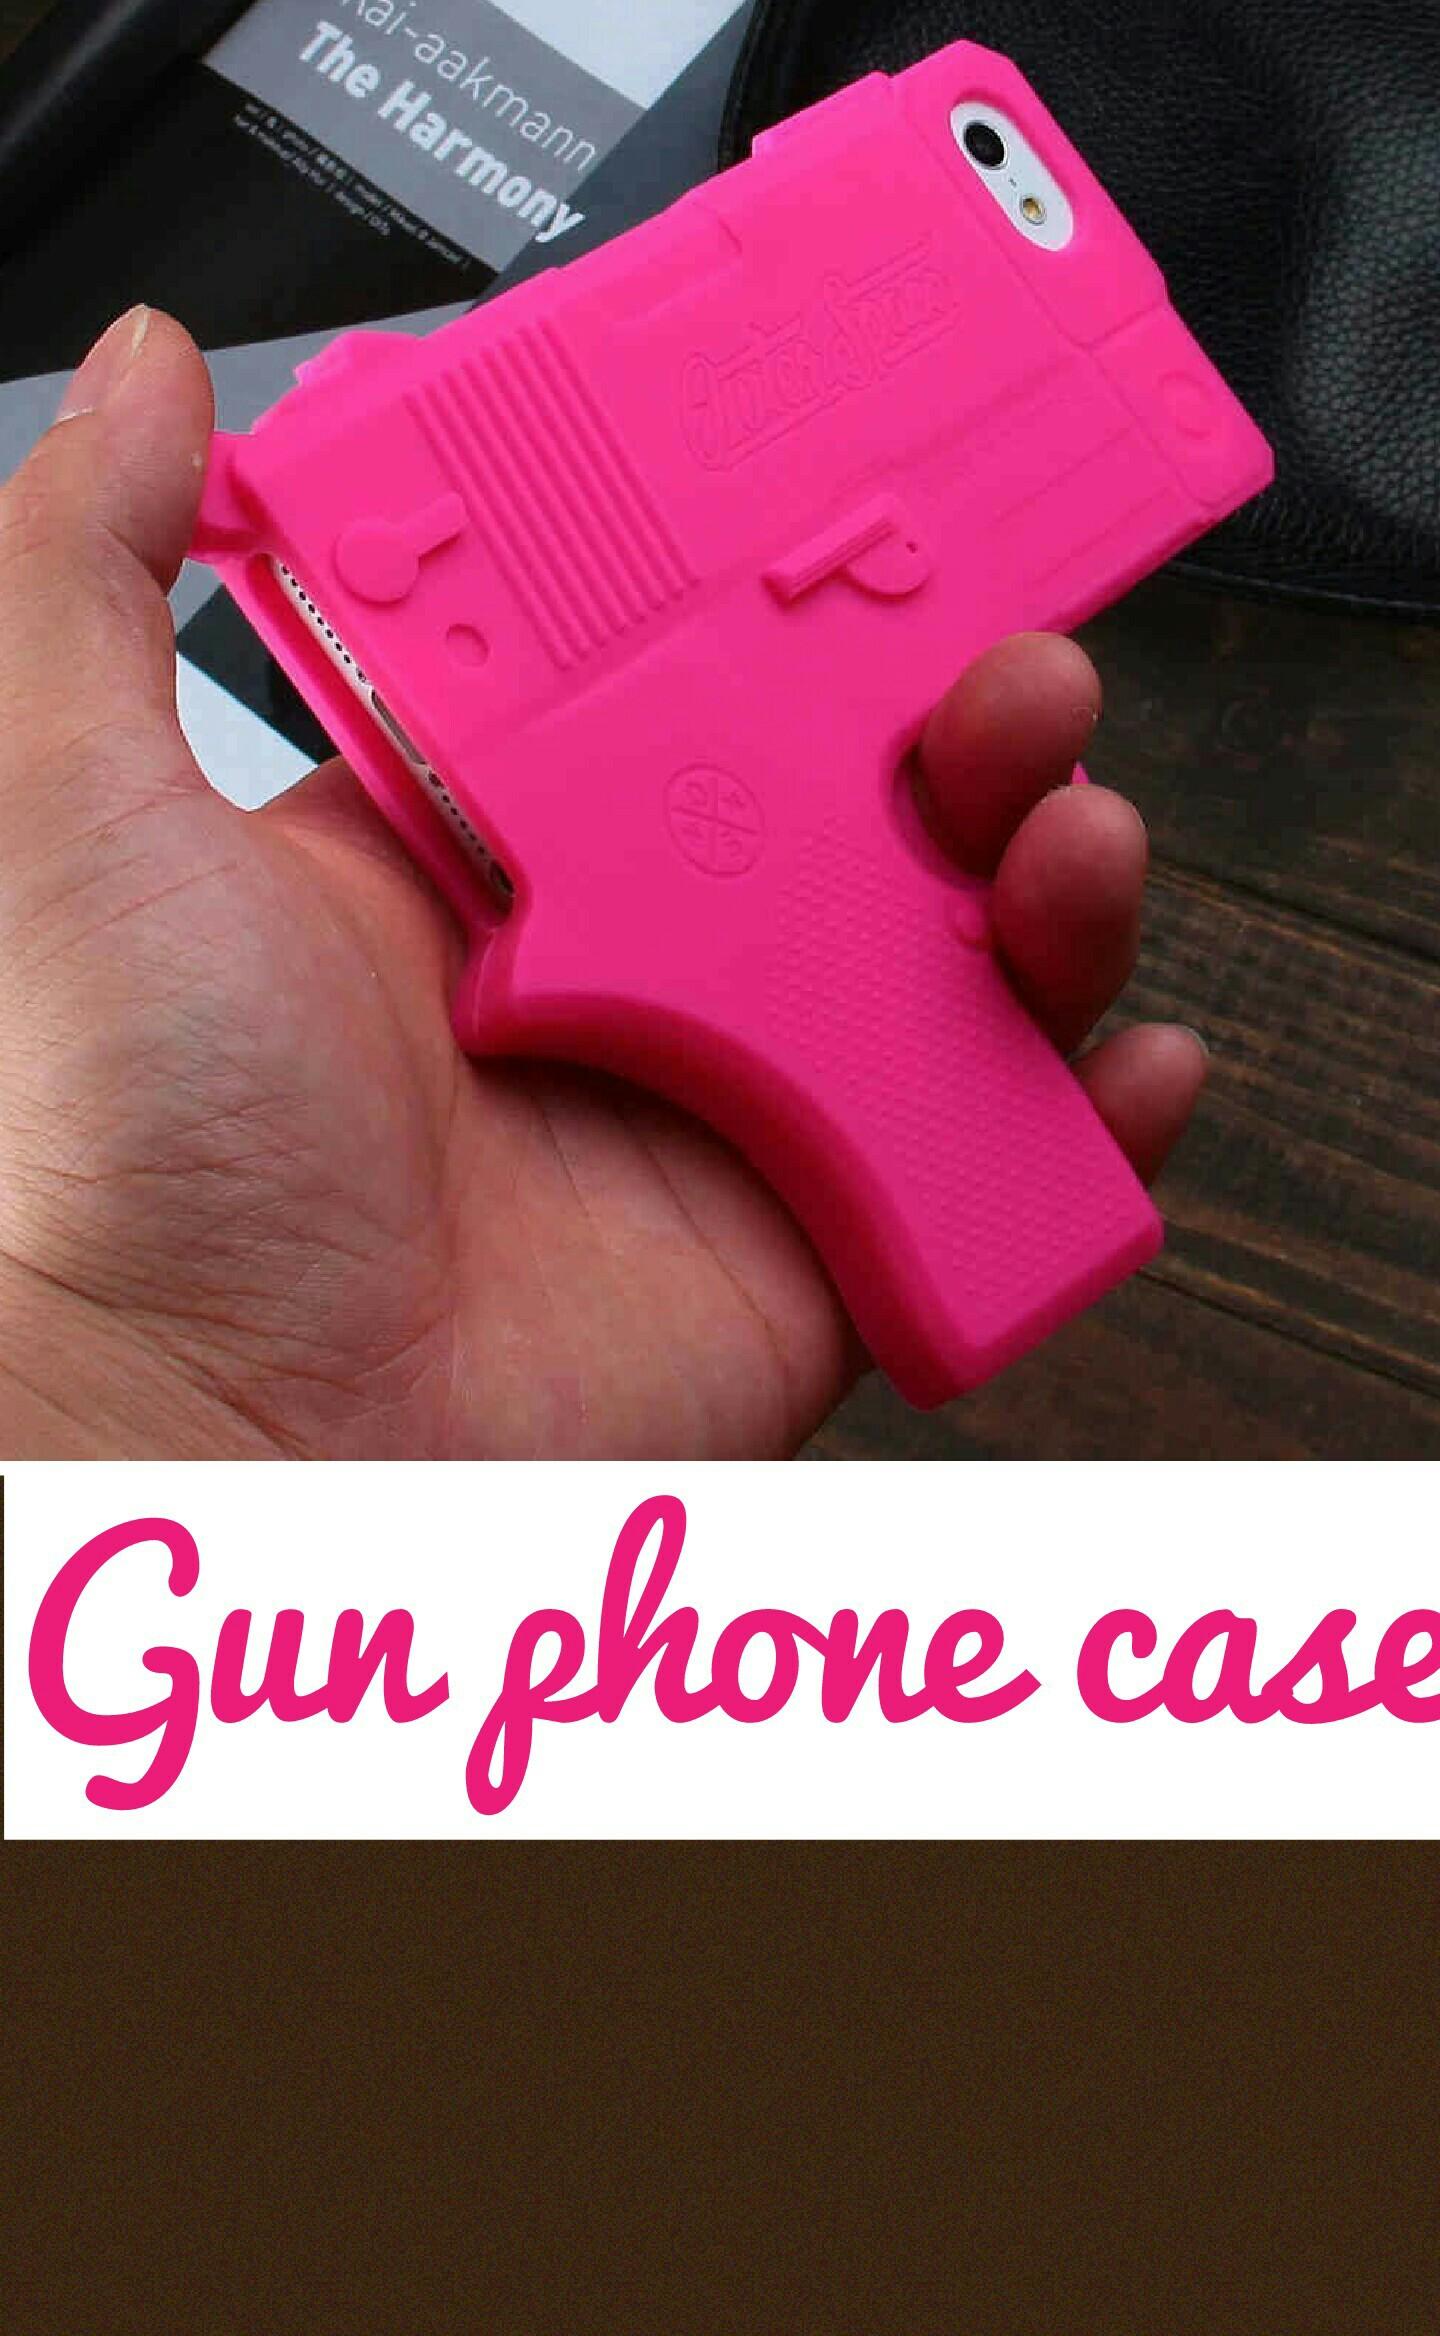 (Gun phone case)
